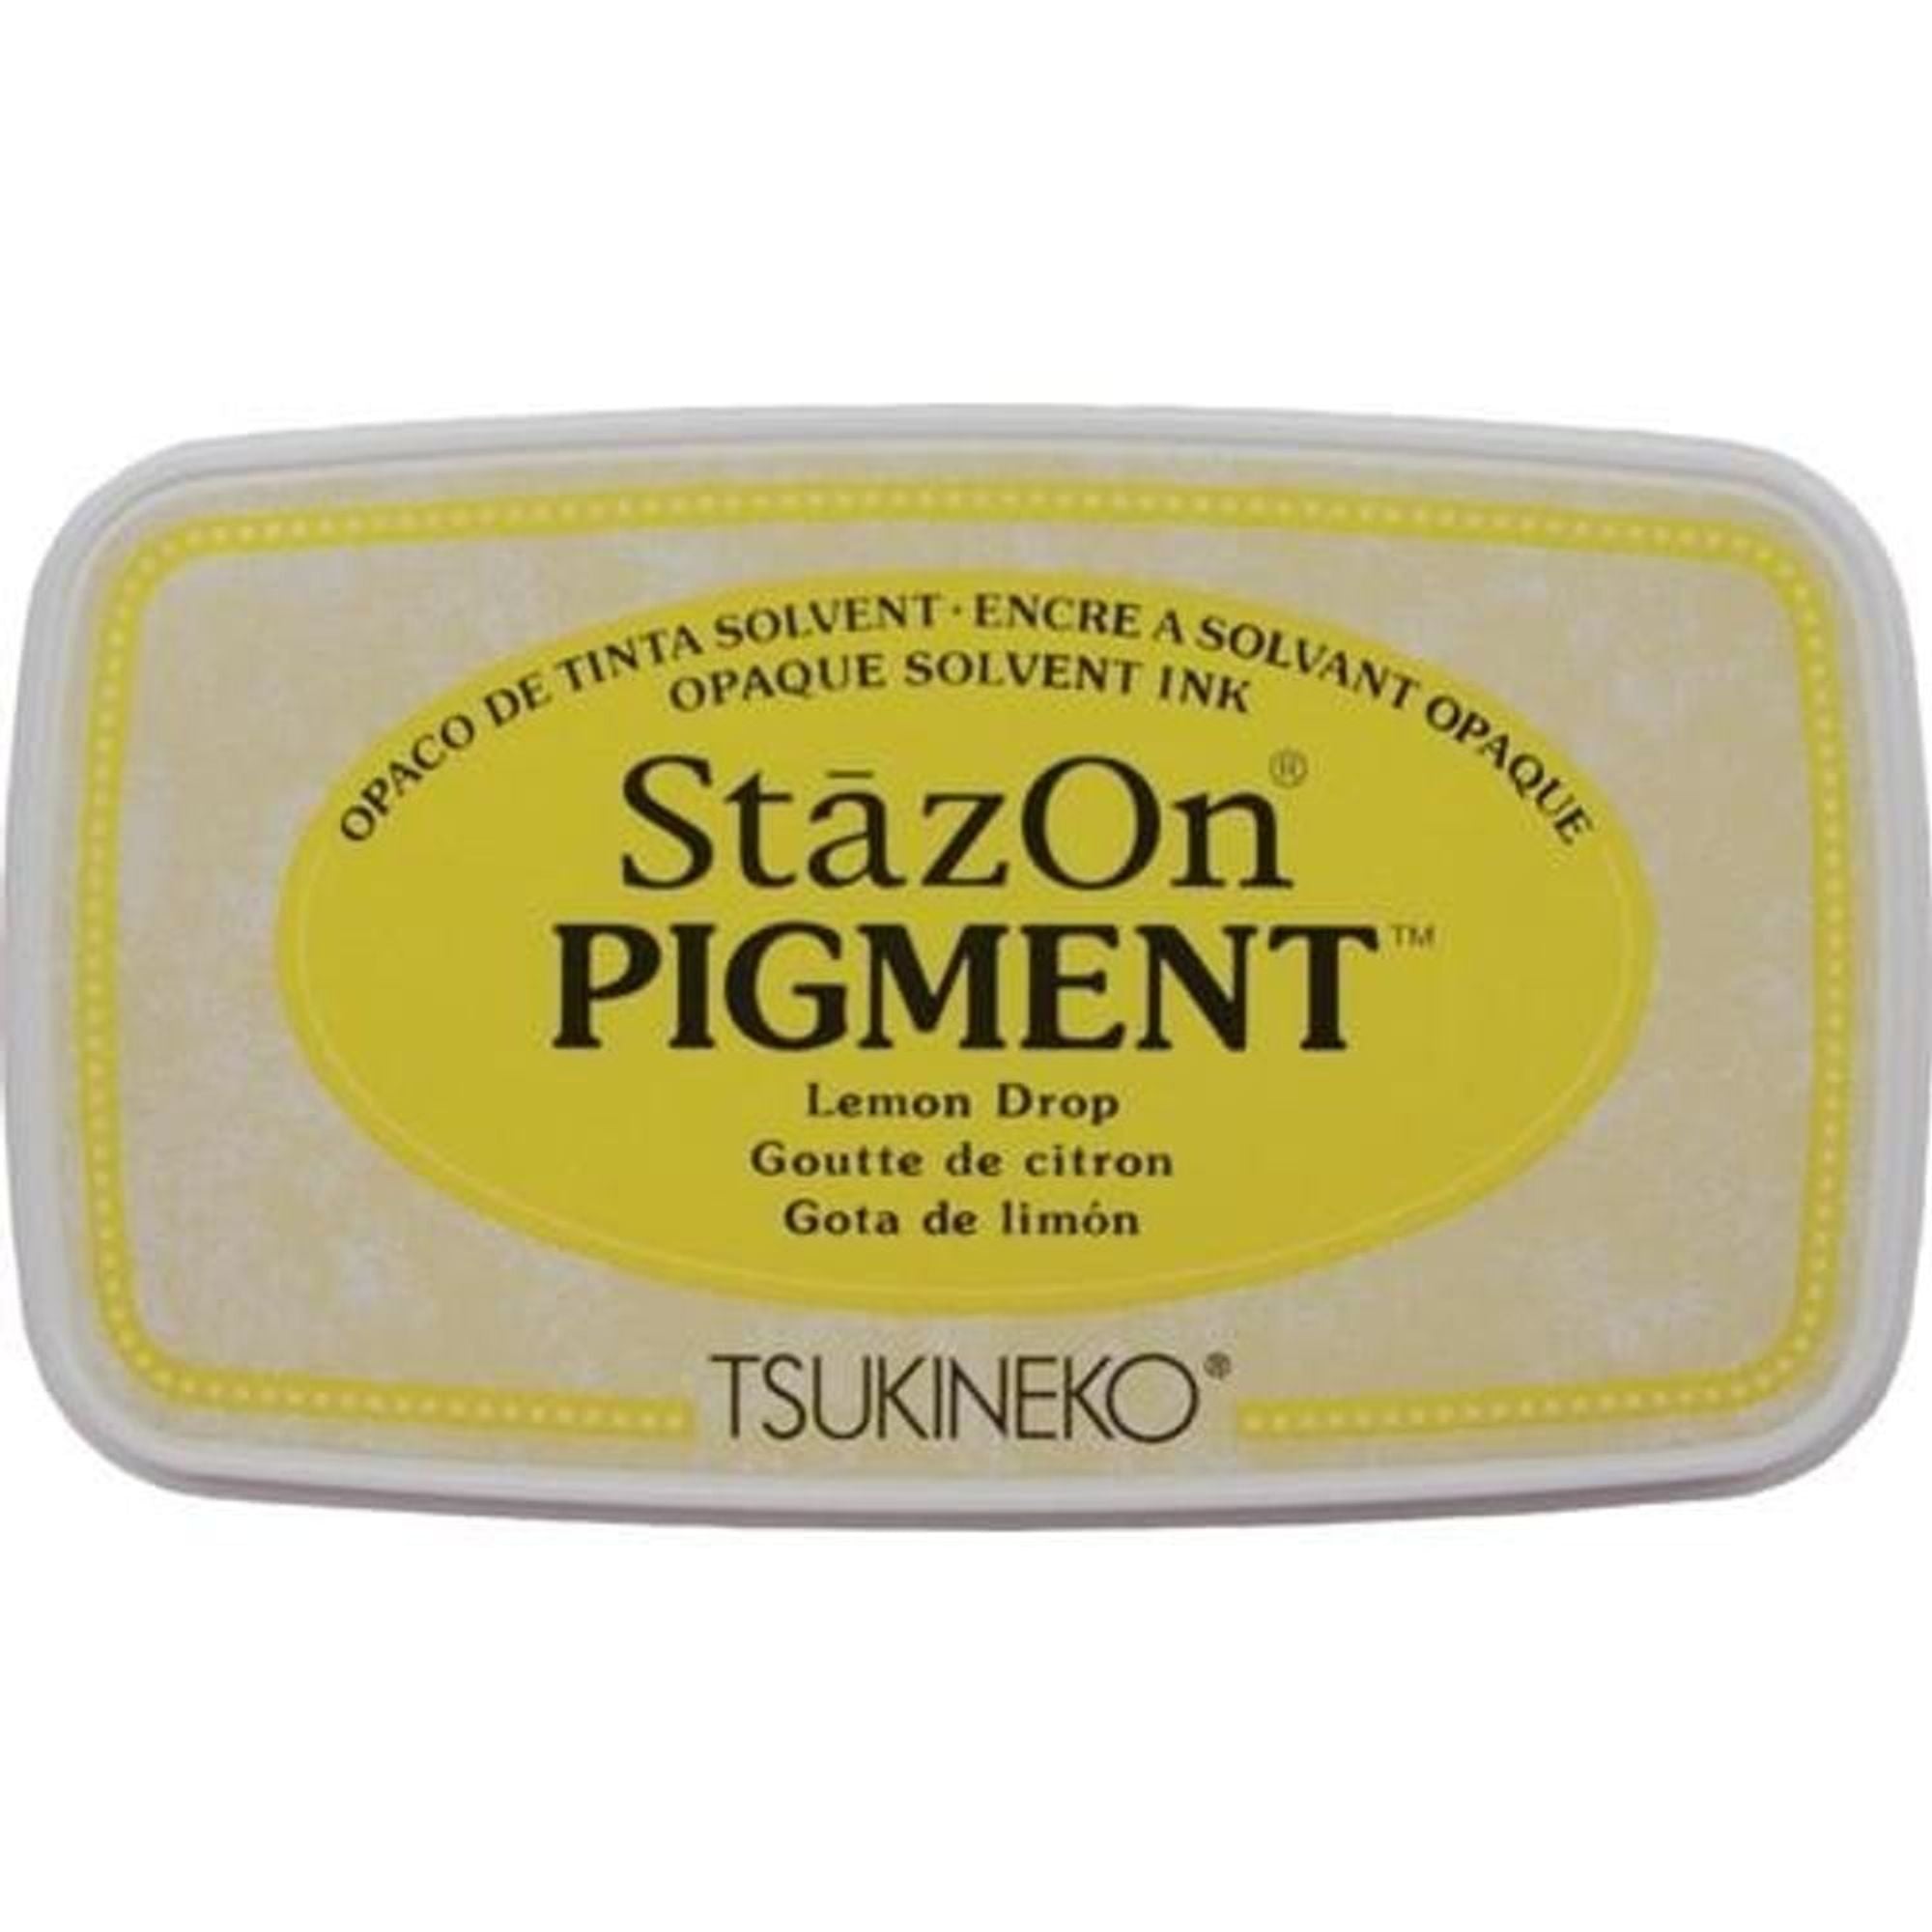 StazOn Pigment Ink Pad